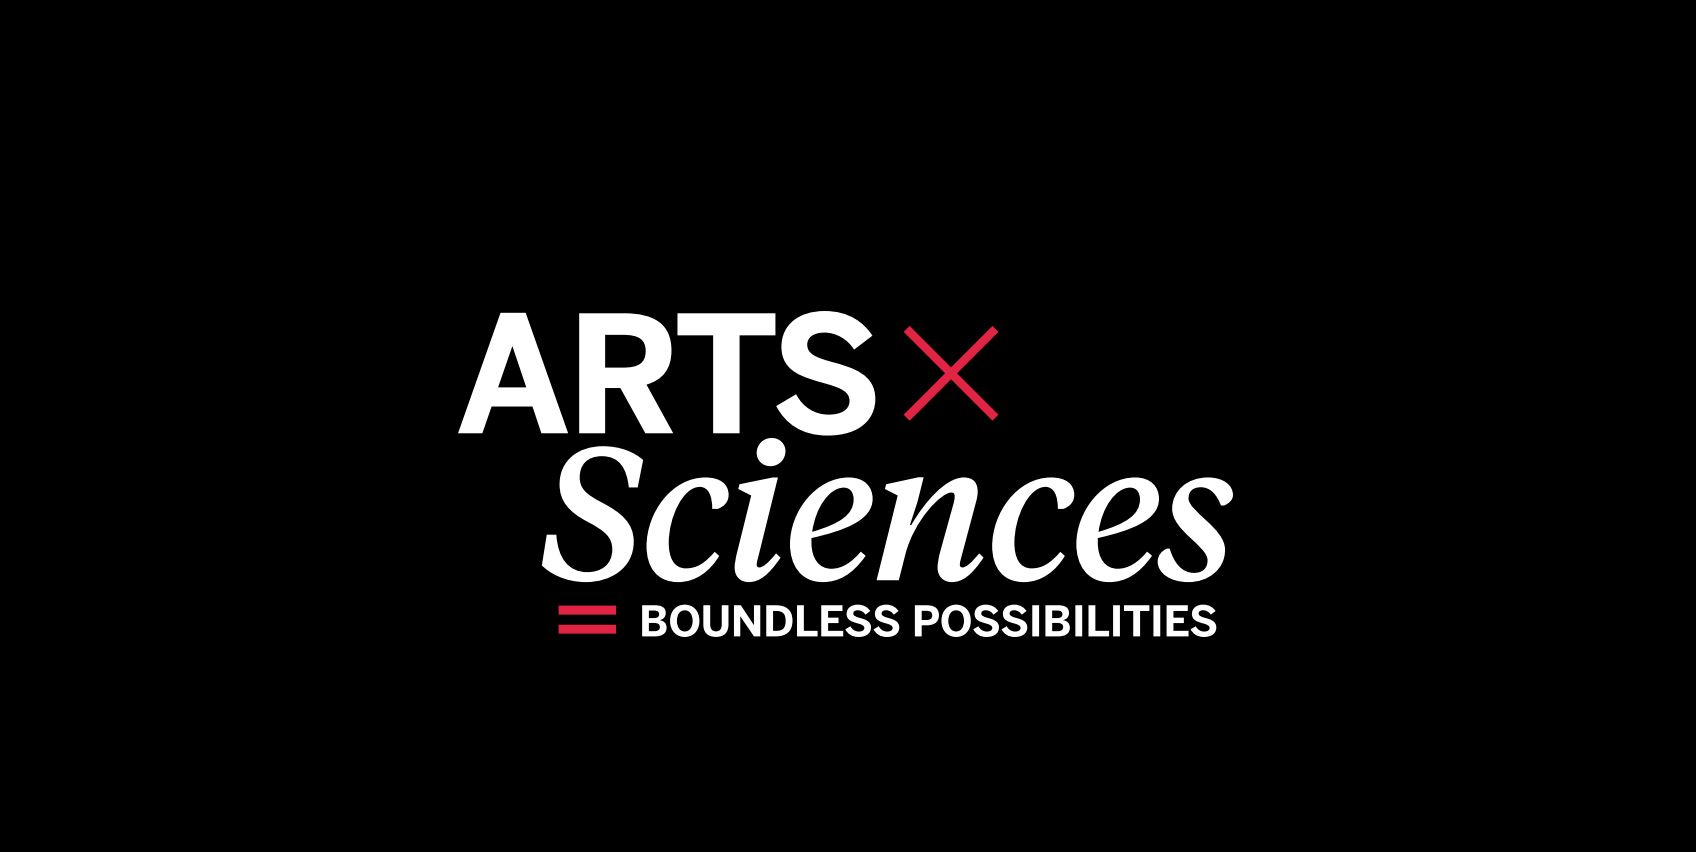 Boston University College of Art & Sciences Rebrand